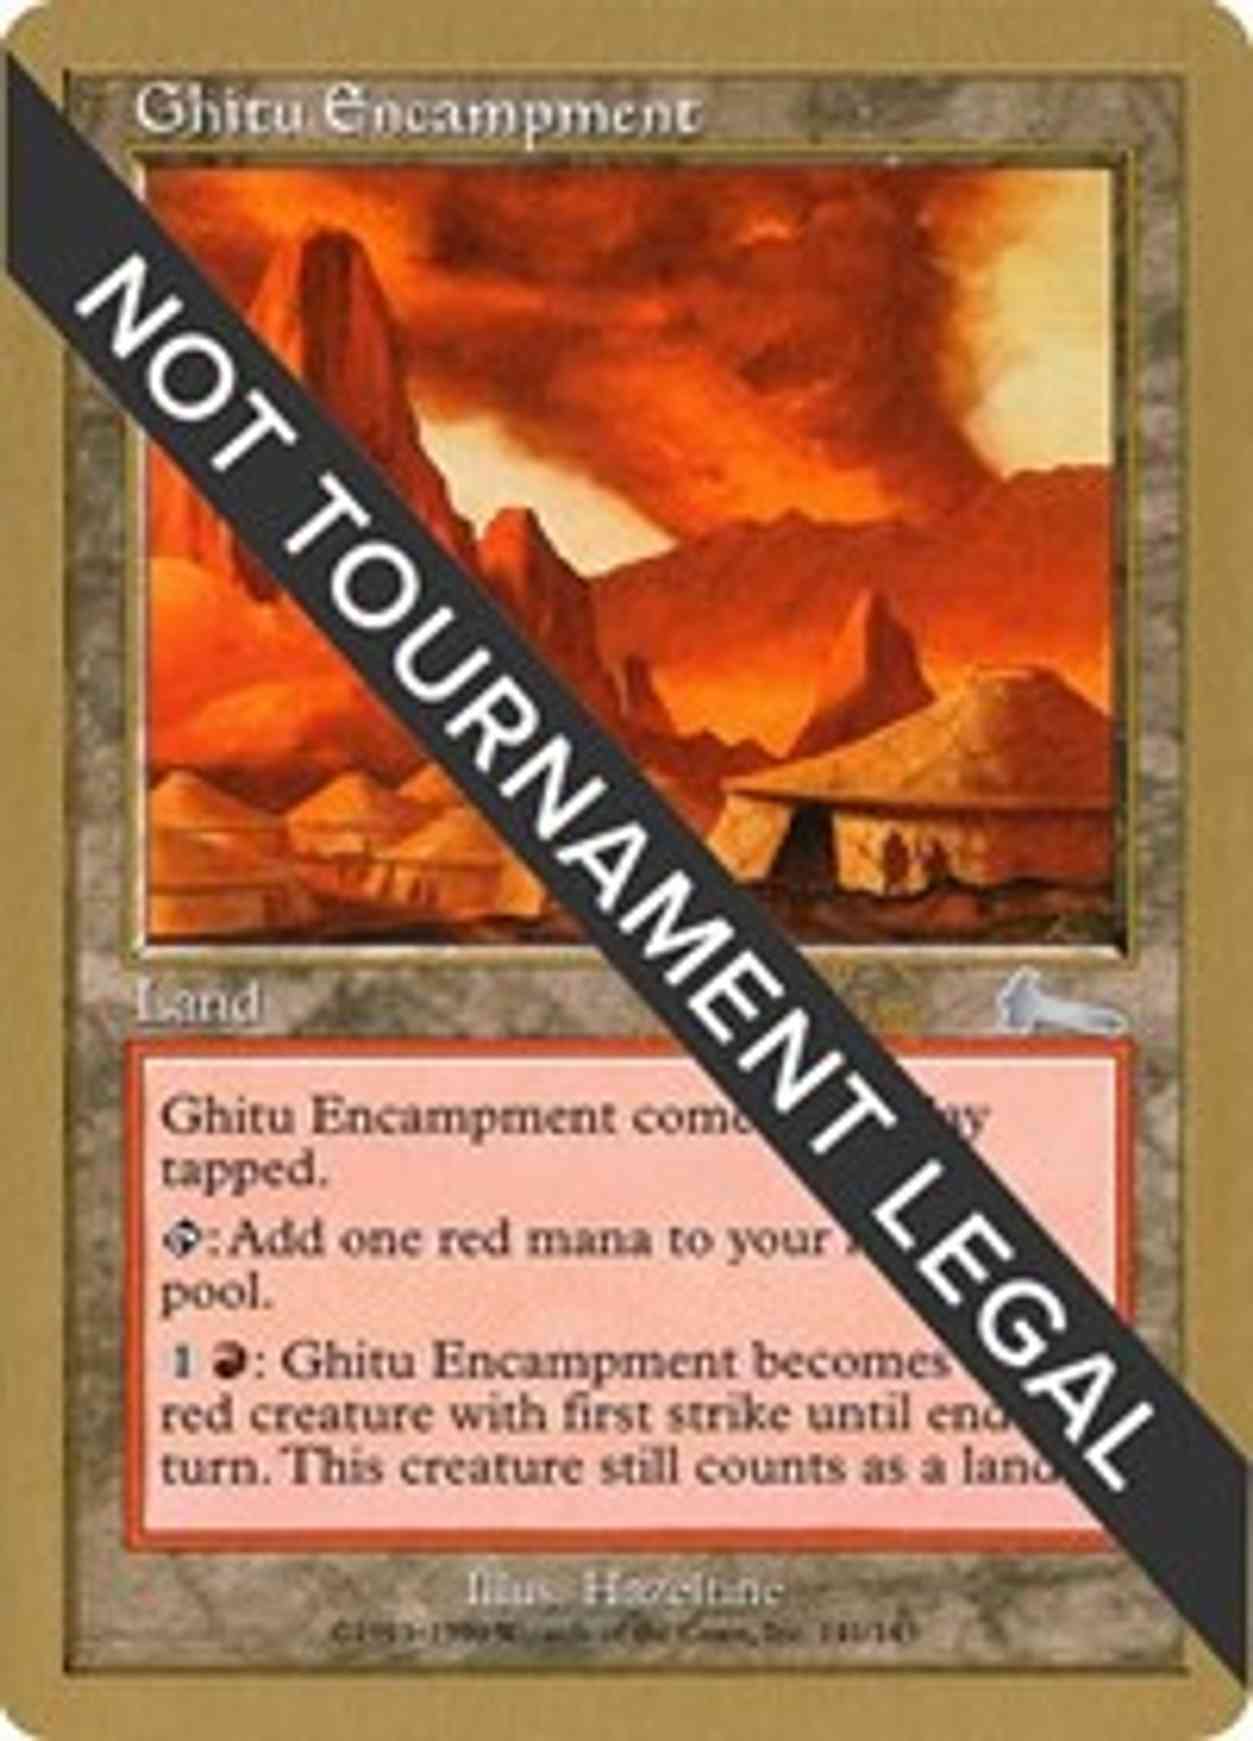 Ghitu Encampment - 1999 Mark Le Pine (ULG) magic card front